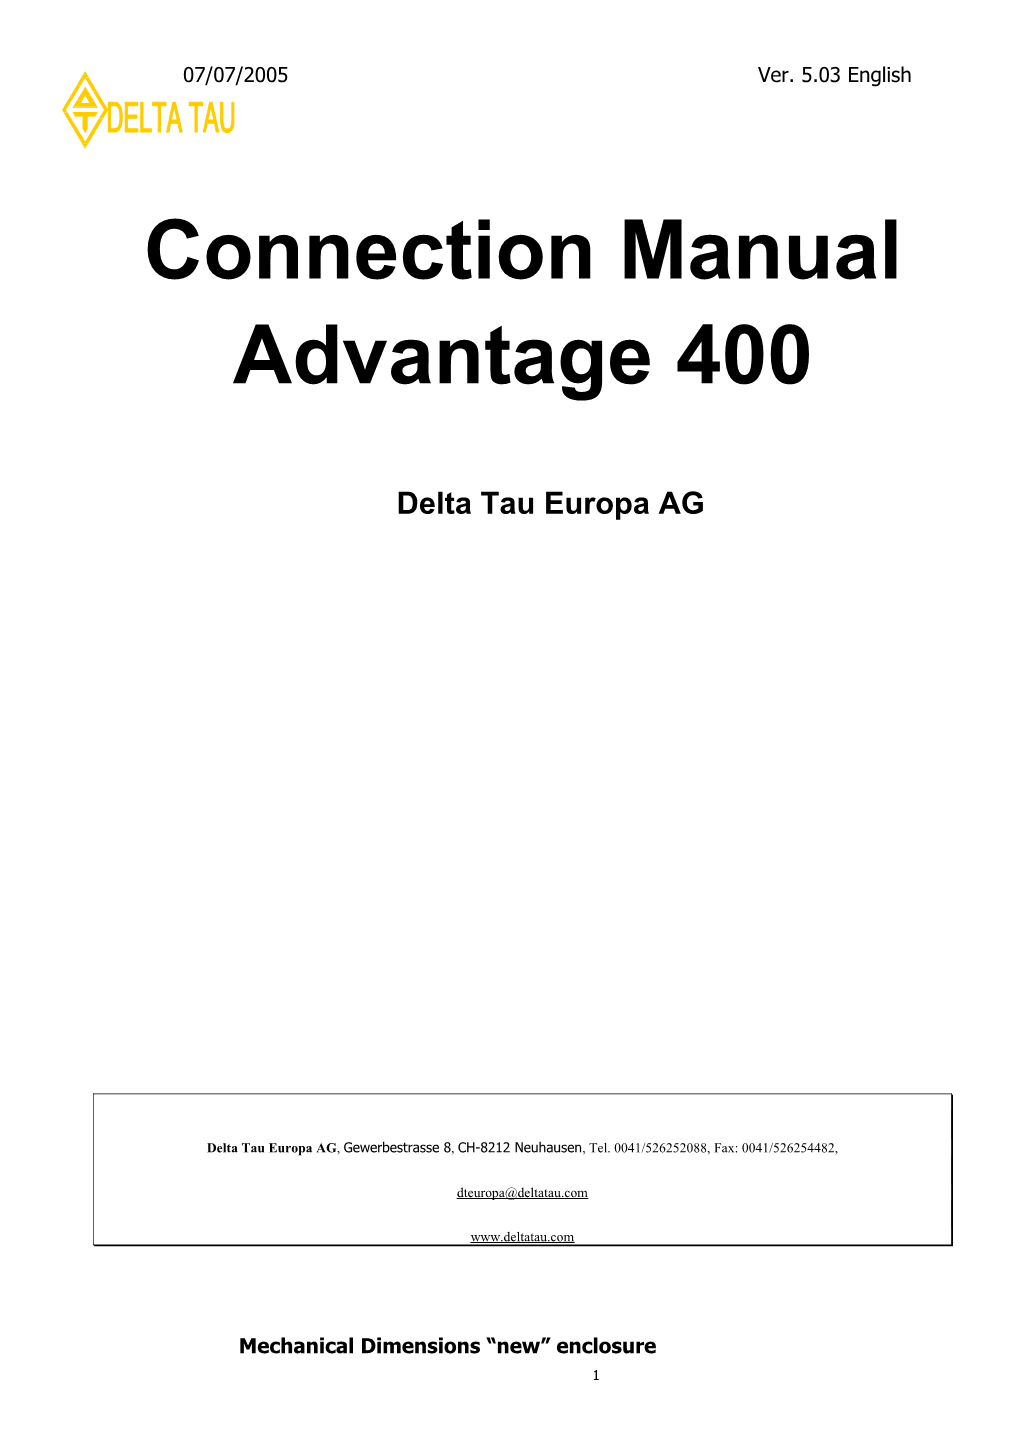 Concept for Adv400 Manual